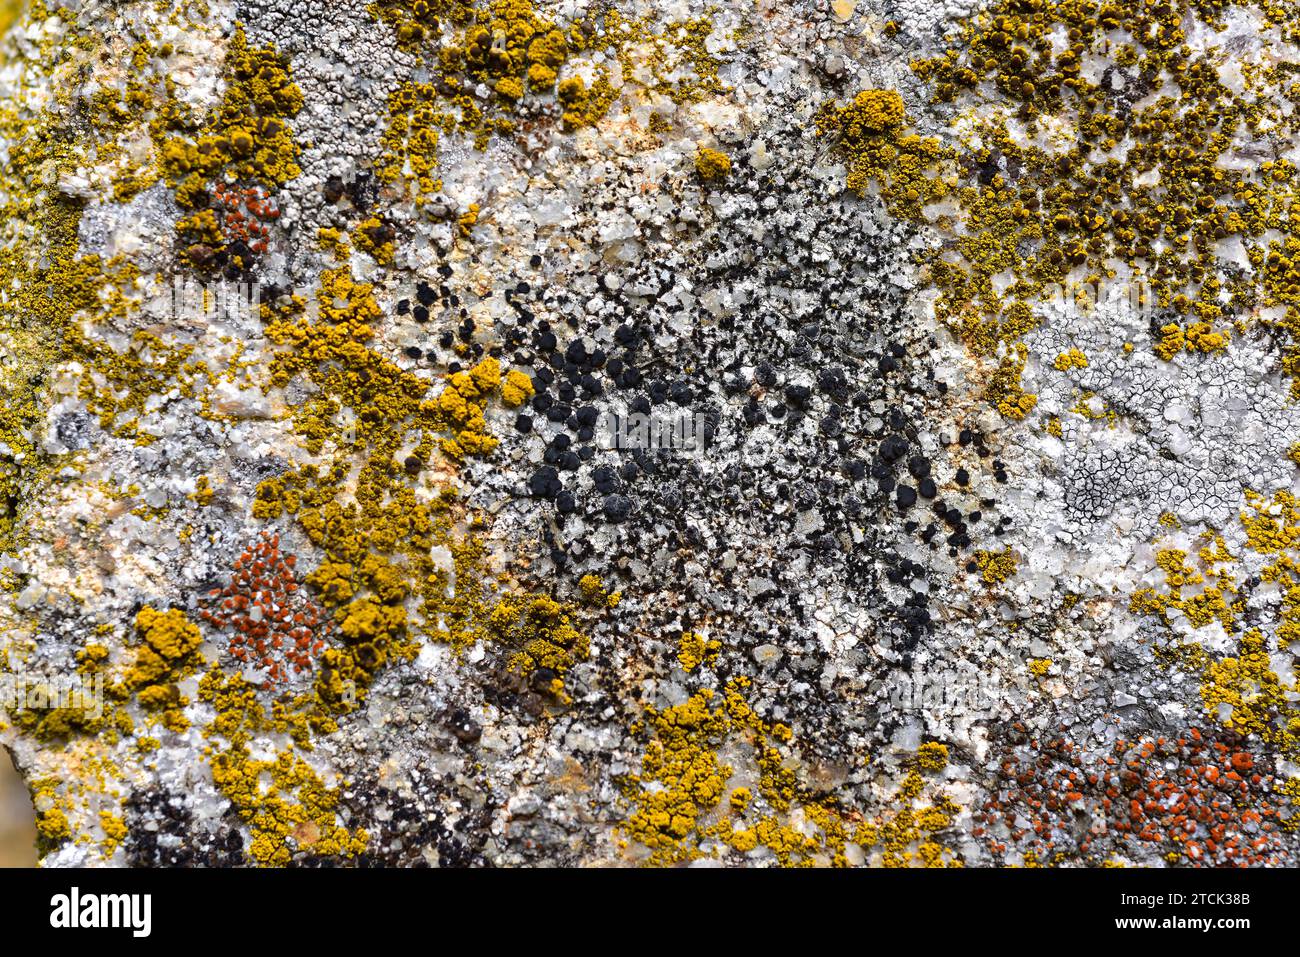 Buellia punctata (black), Candelariella vitellina (yellow) and Caloplaca crenularia (red) are three crustoses lichens. This photo was taken in Arribes Stock Photo